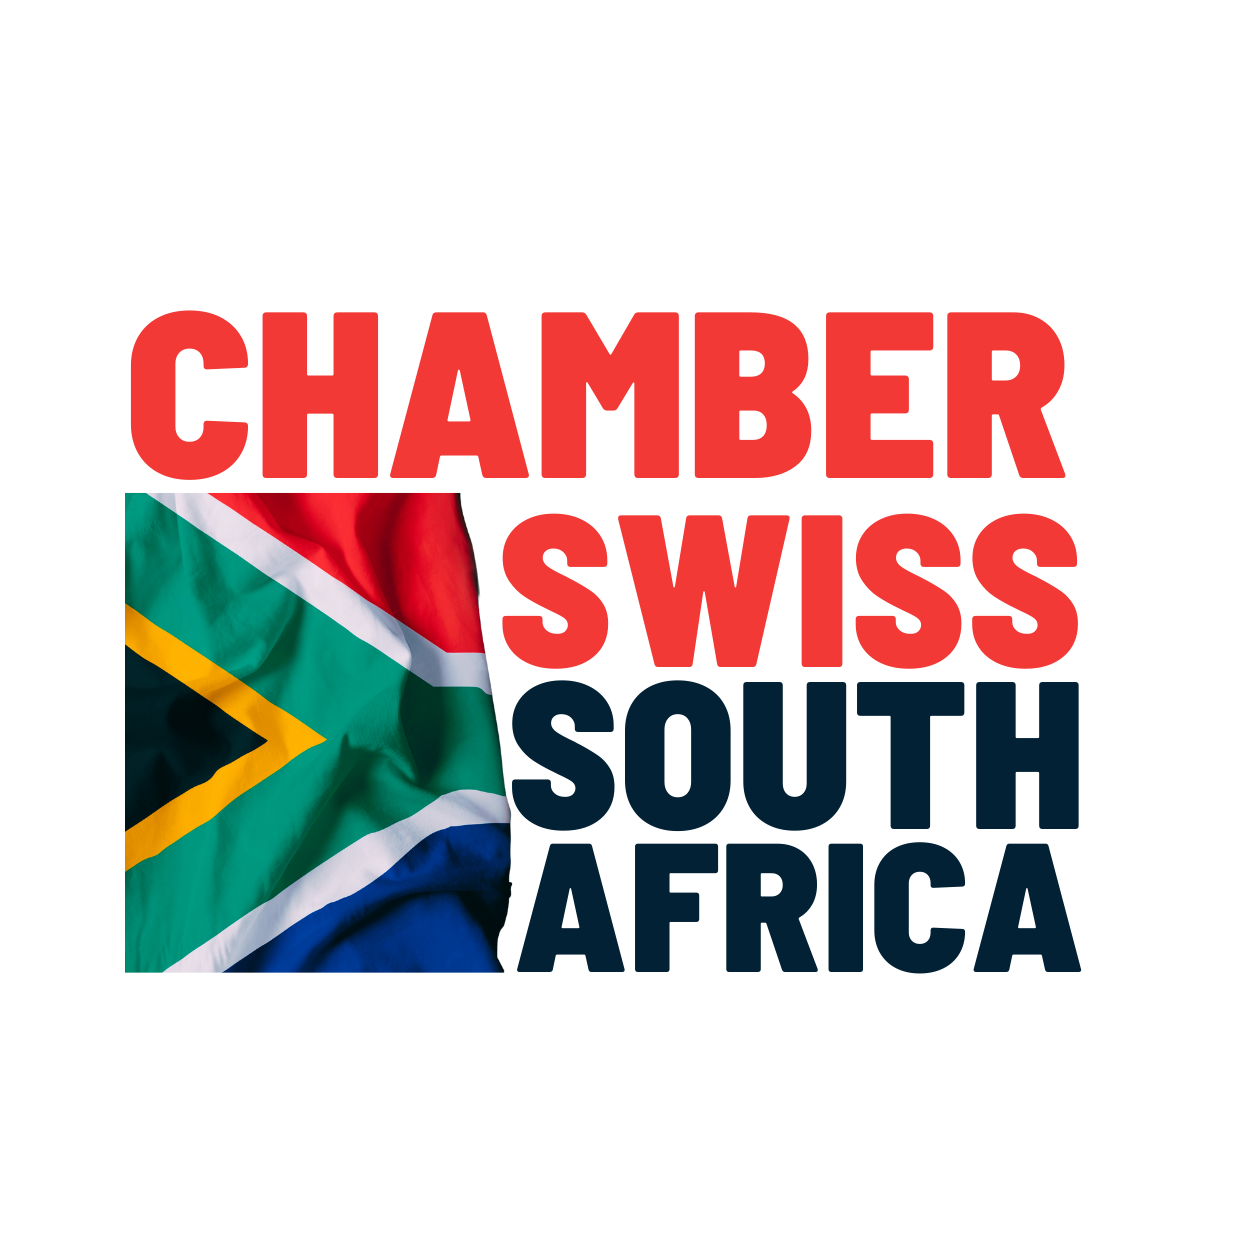 Chamber Swiss Southa Africa logo PRINCIPAL